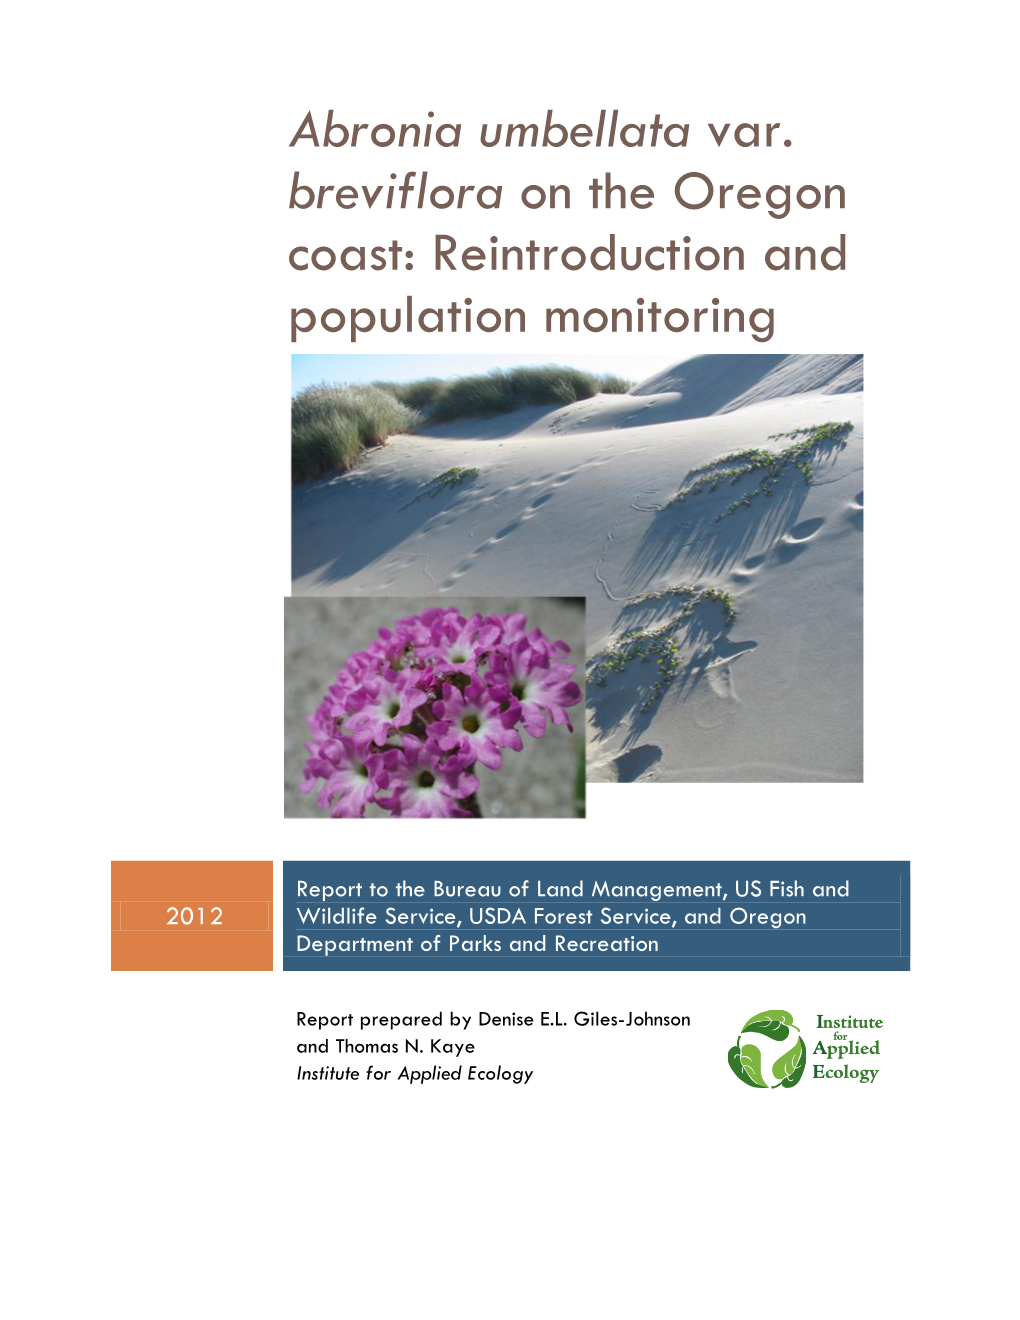 Abronia Umbellata Var. Breviflora on the Oregon Coast: Reintroduction and Population Monitoring